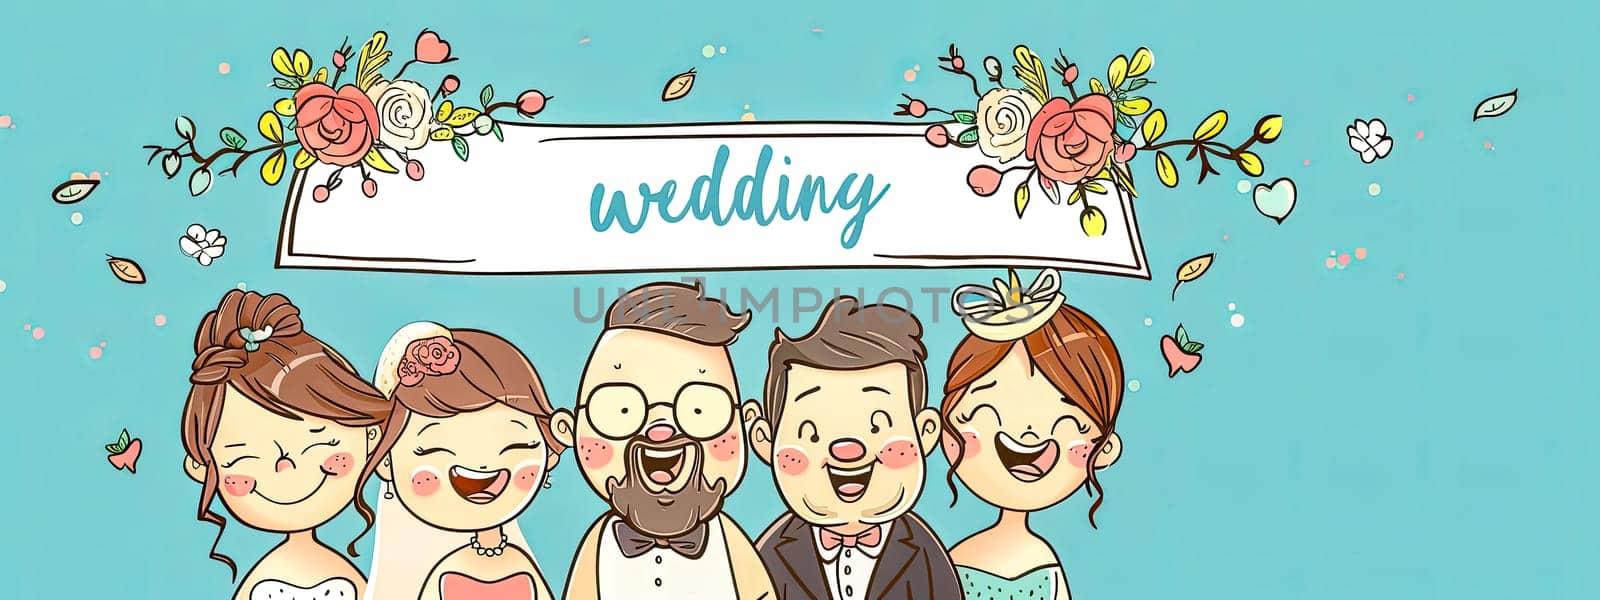 Joyful cartoon wedding party banner illustration by Edophoto